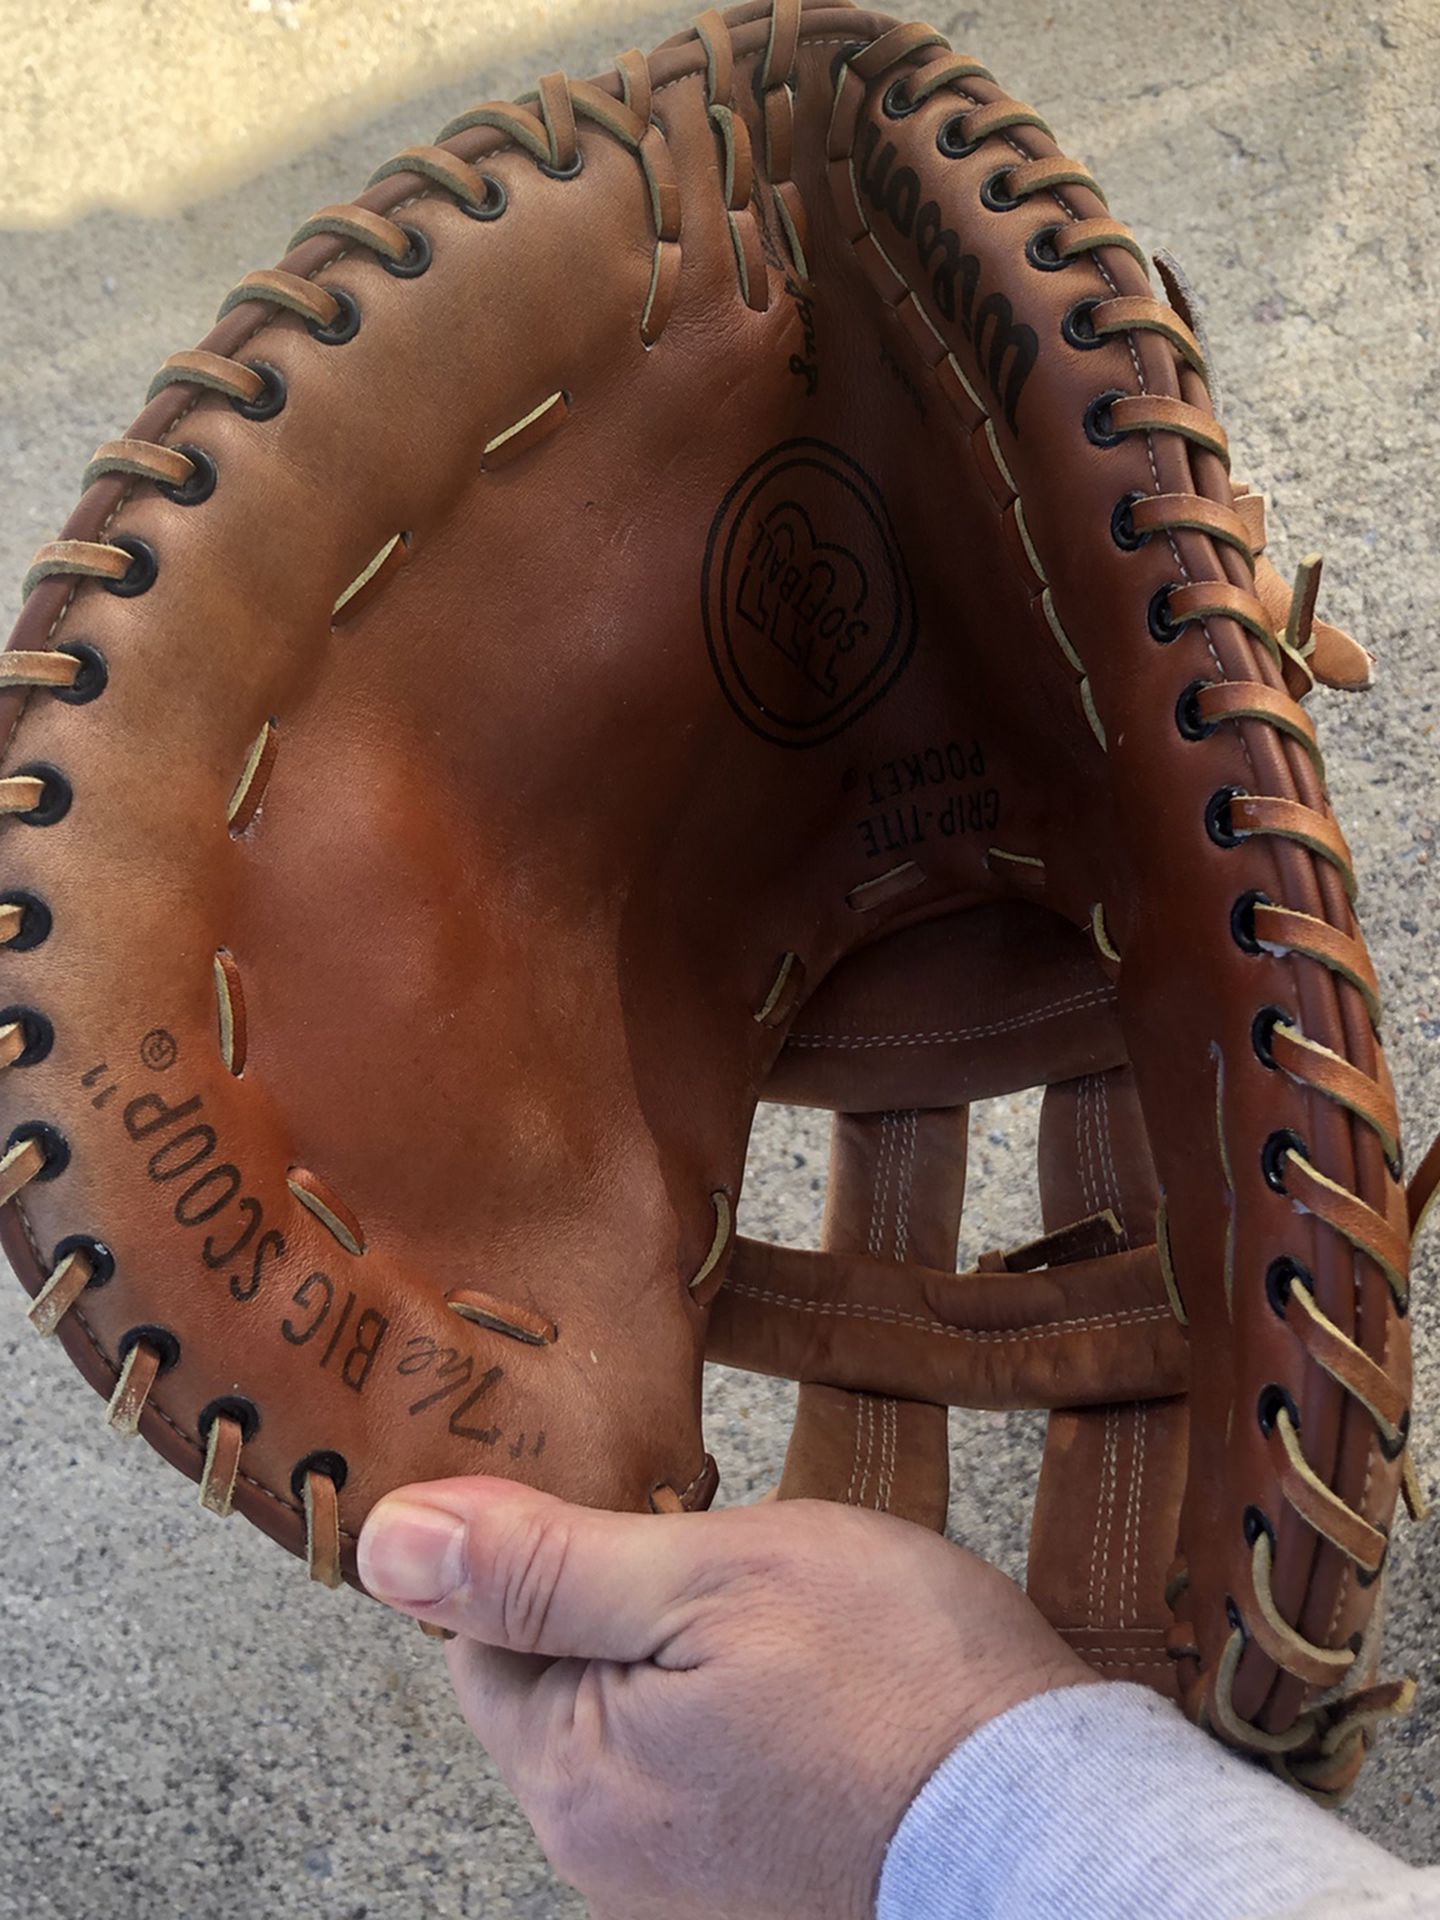 Wilson Softball “big Scoop” Glove